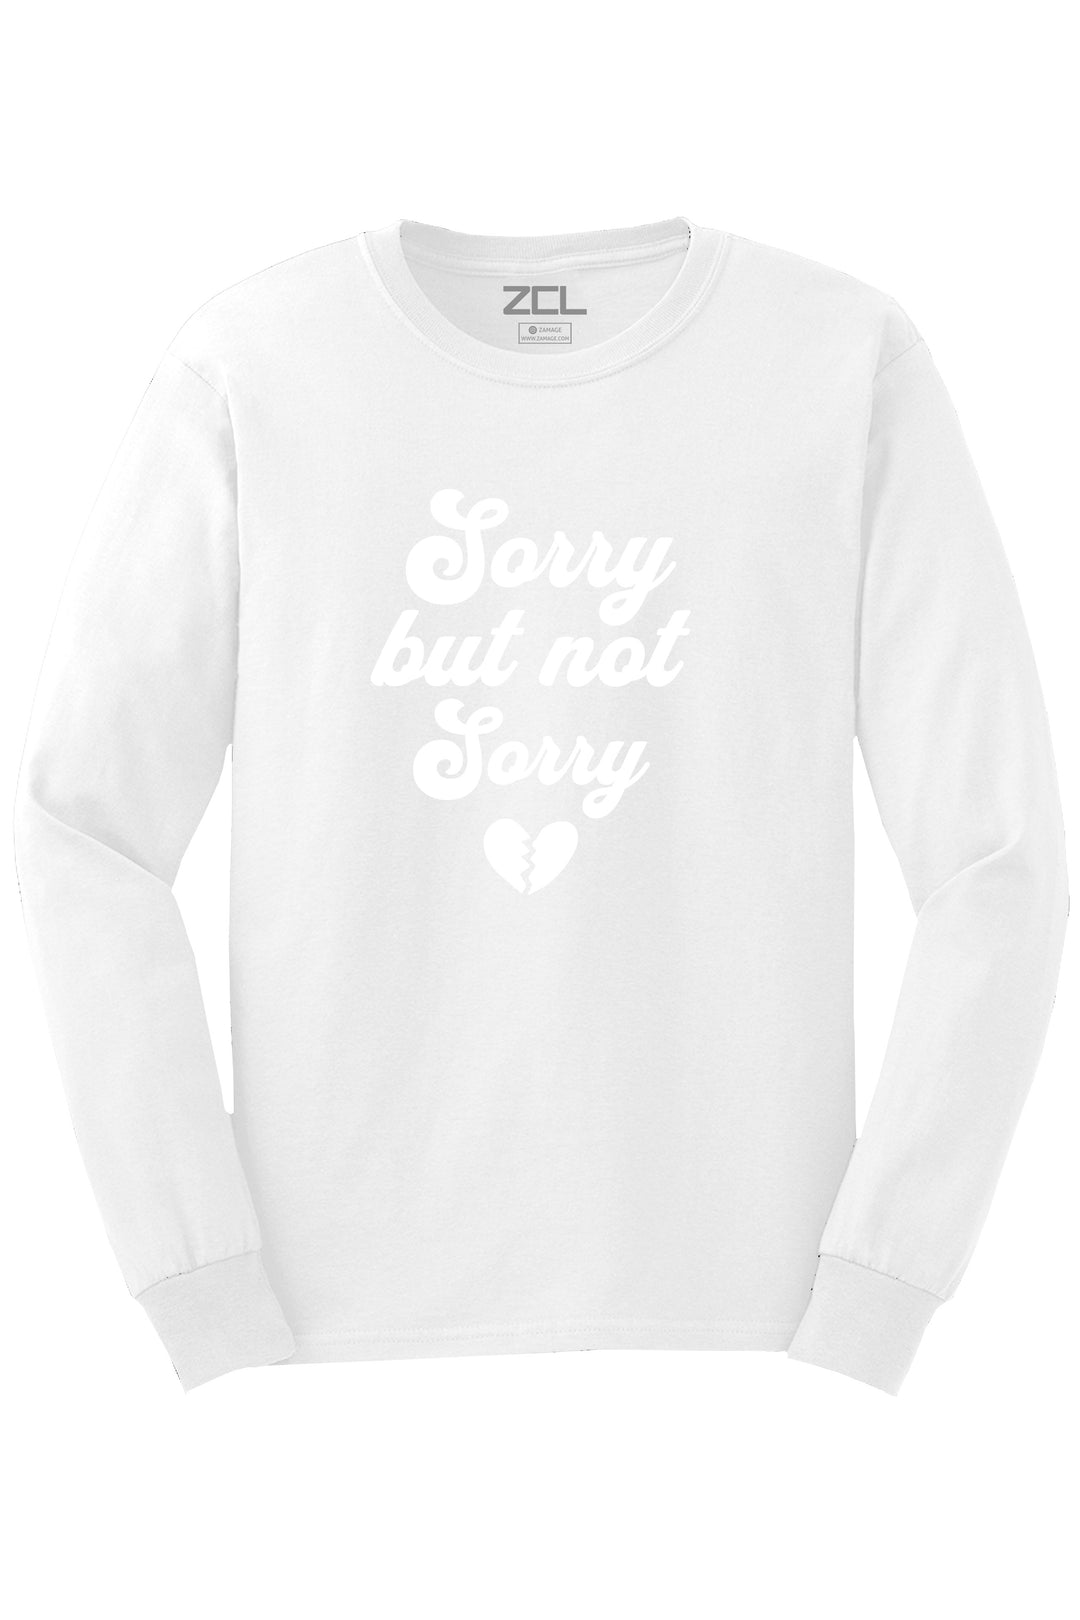 Sorry Not Sorry Long Sleeve Tee (White Logo) - Zamage